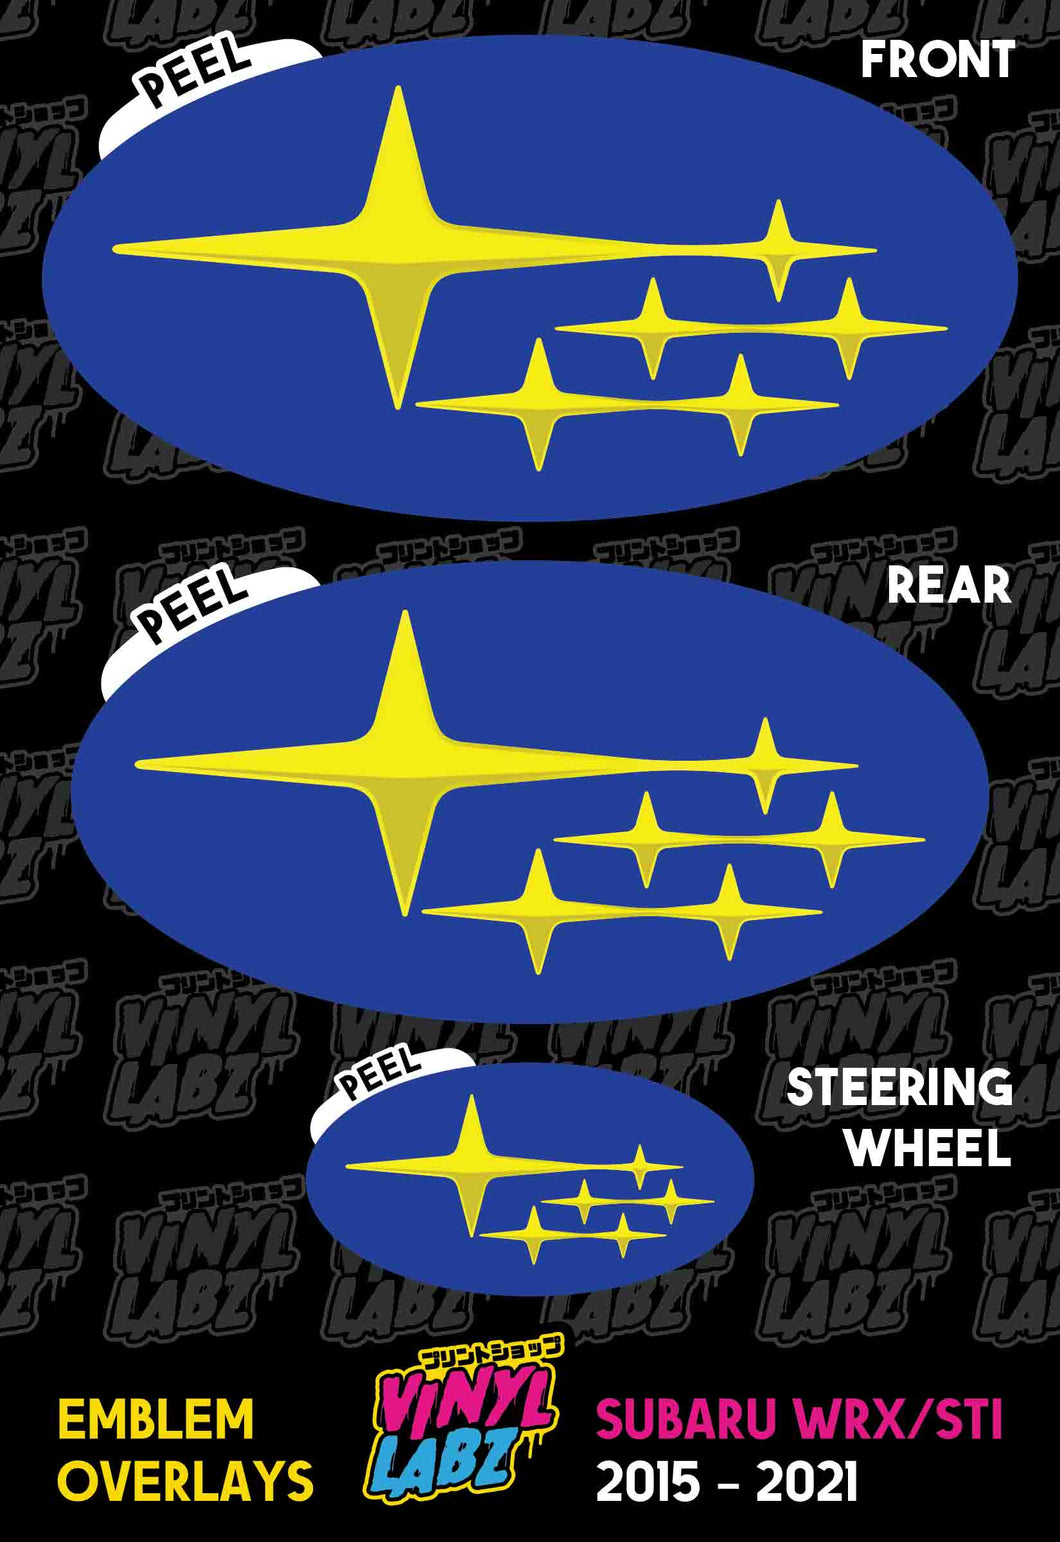 Subaru Vinyl Emblem Overlay (Blue and Yellow) | 2015-2021 Subaru WRX/STI